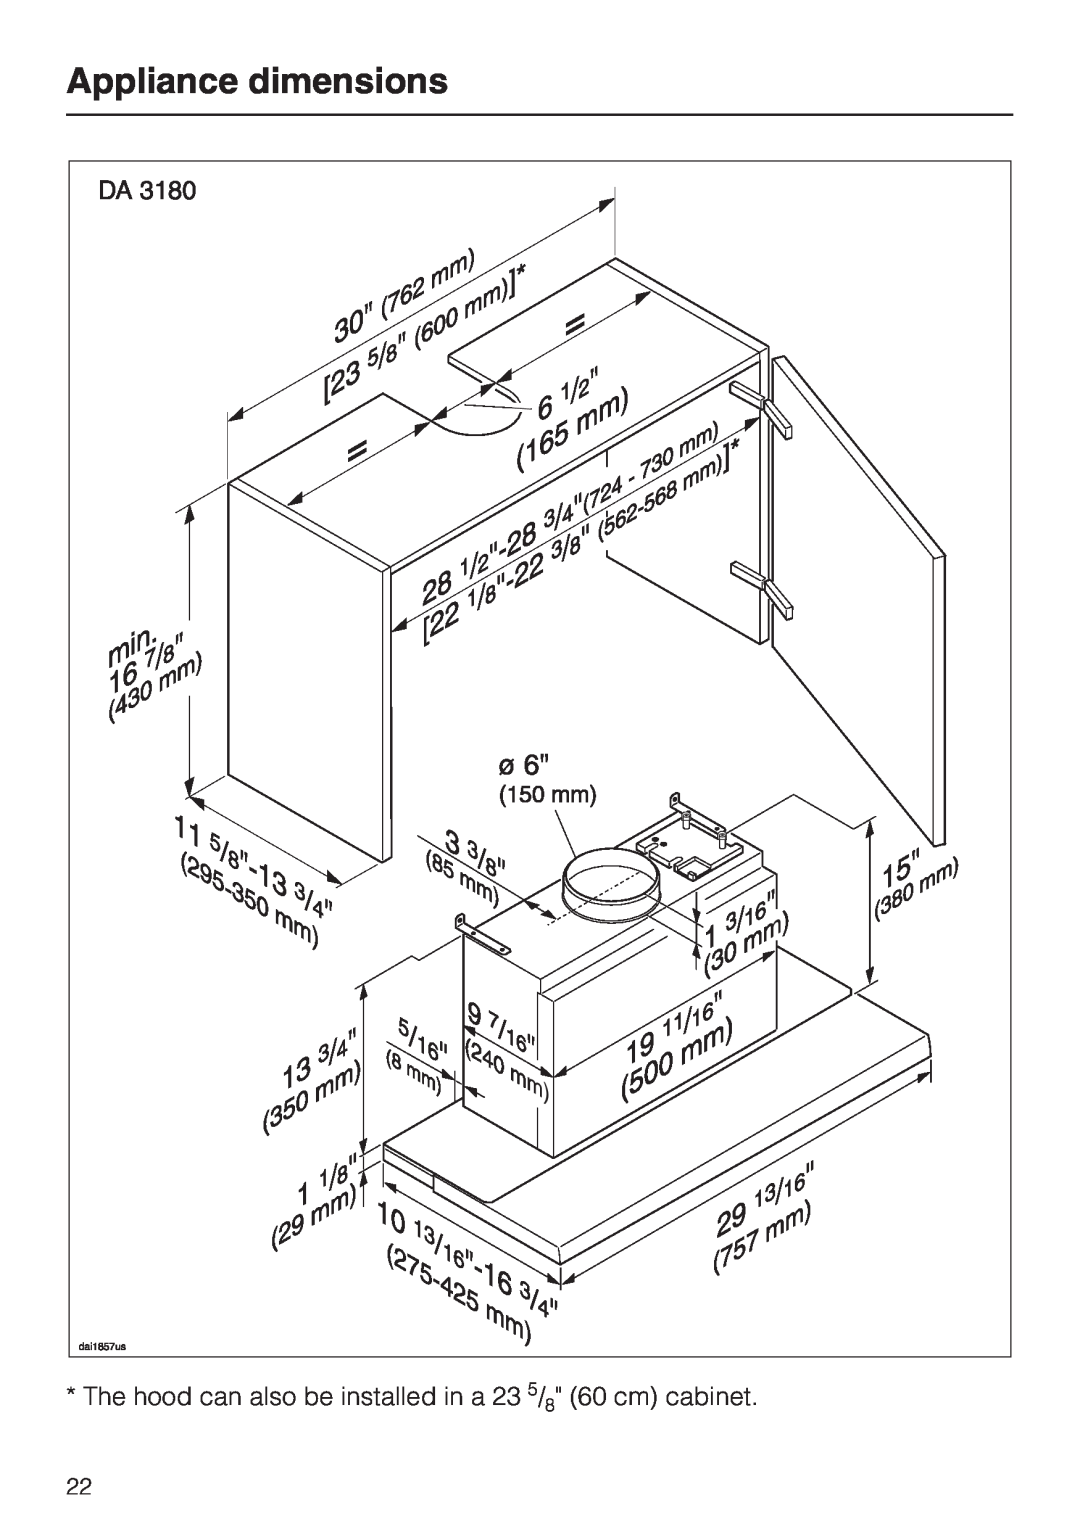 Miele DA3190, DA 3180, DA 3160 installation instructions Appliance dimensions 